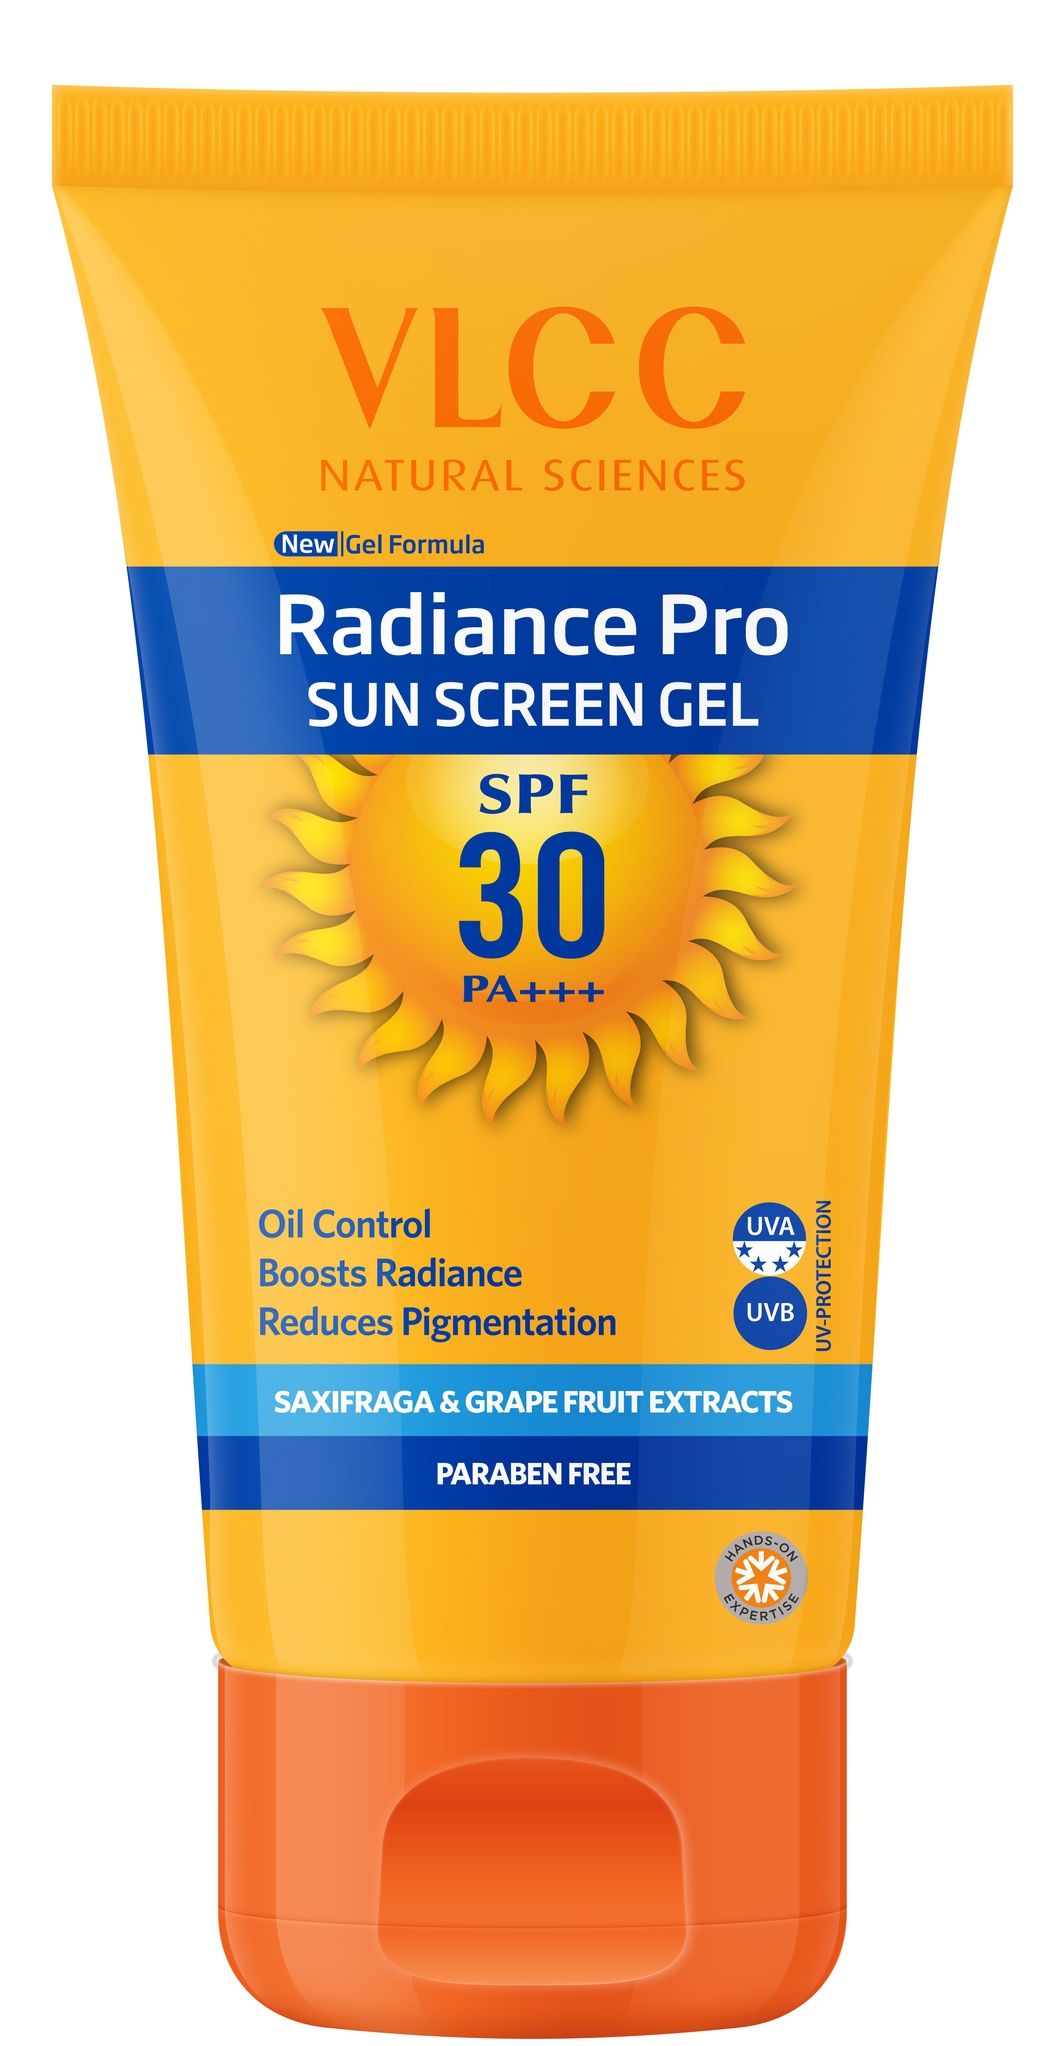 VLCC Radiance Pro Sunscreen Gel